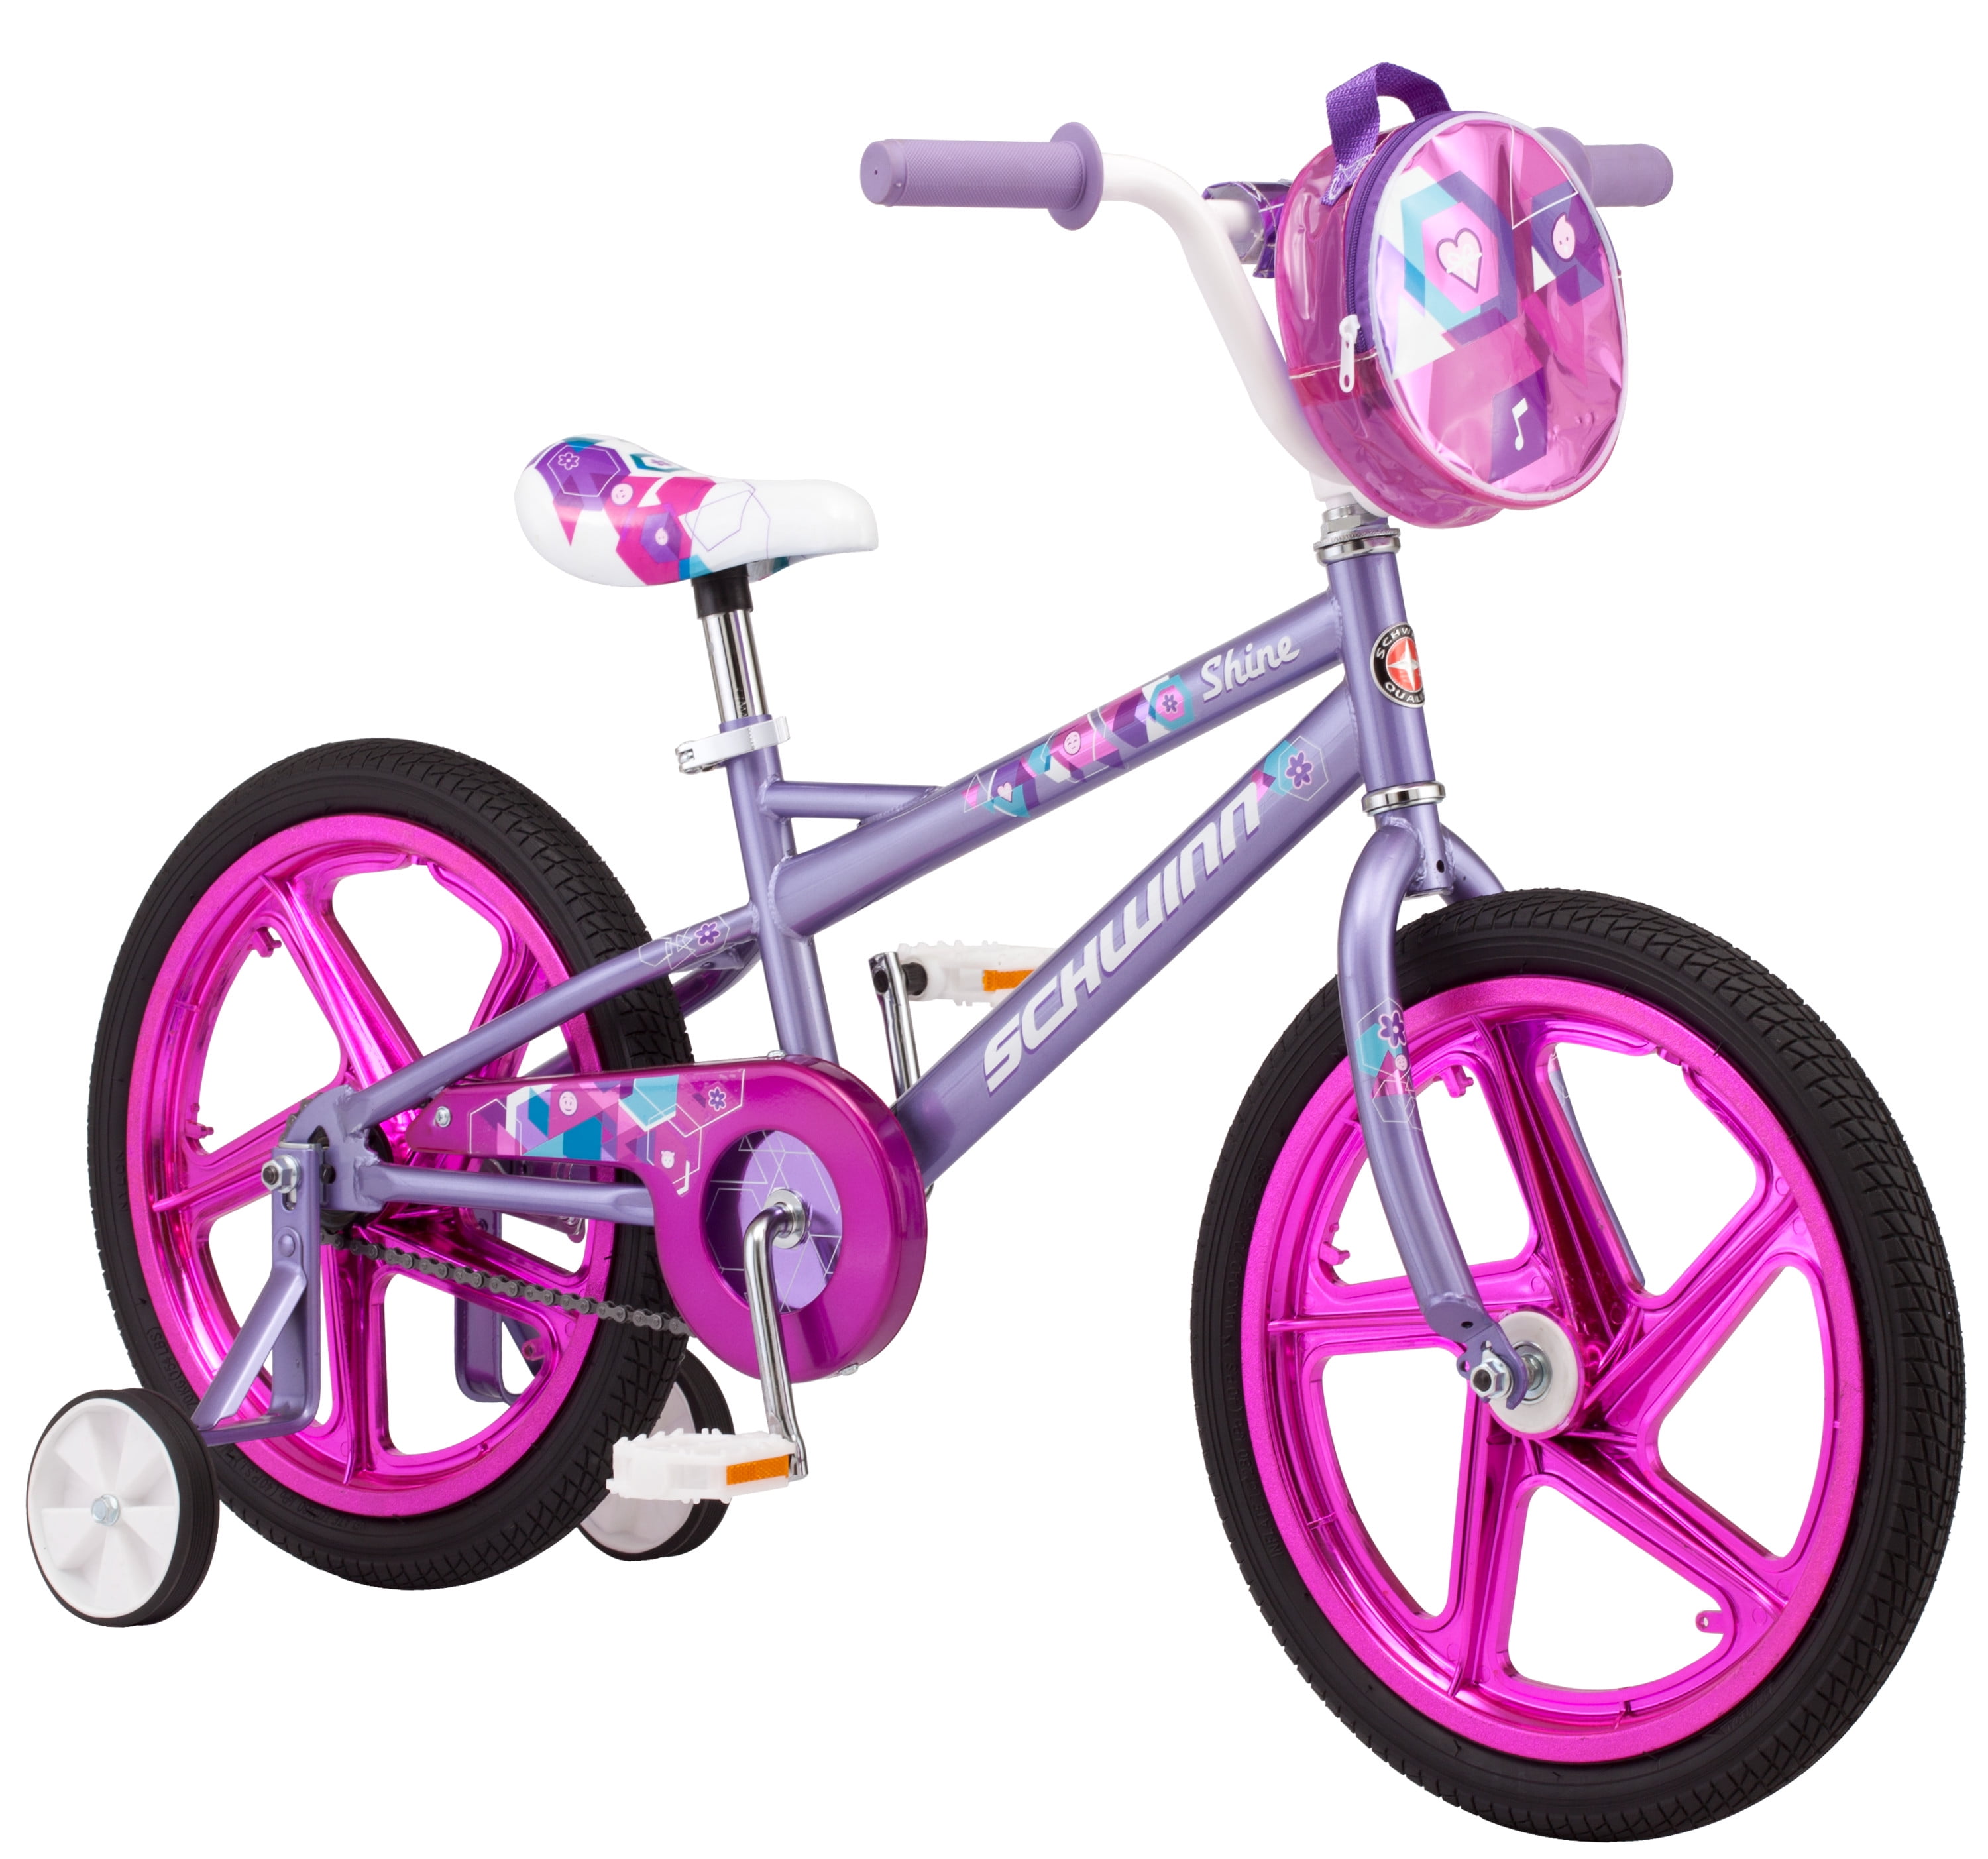 New in Box 12 inch Girls Bike Purple with Training Wheels Kids Toddlers 